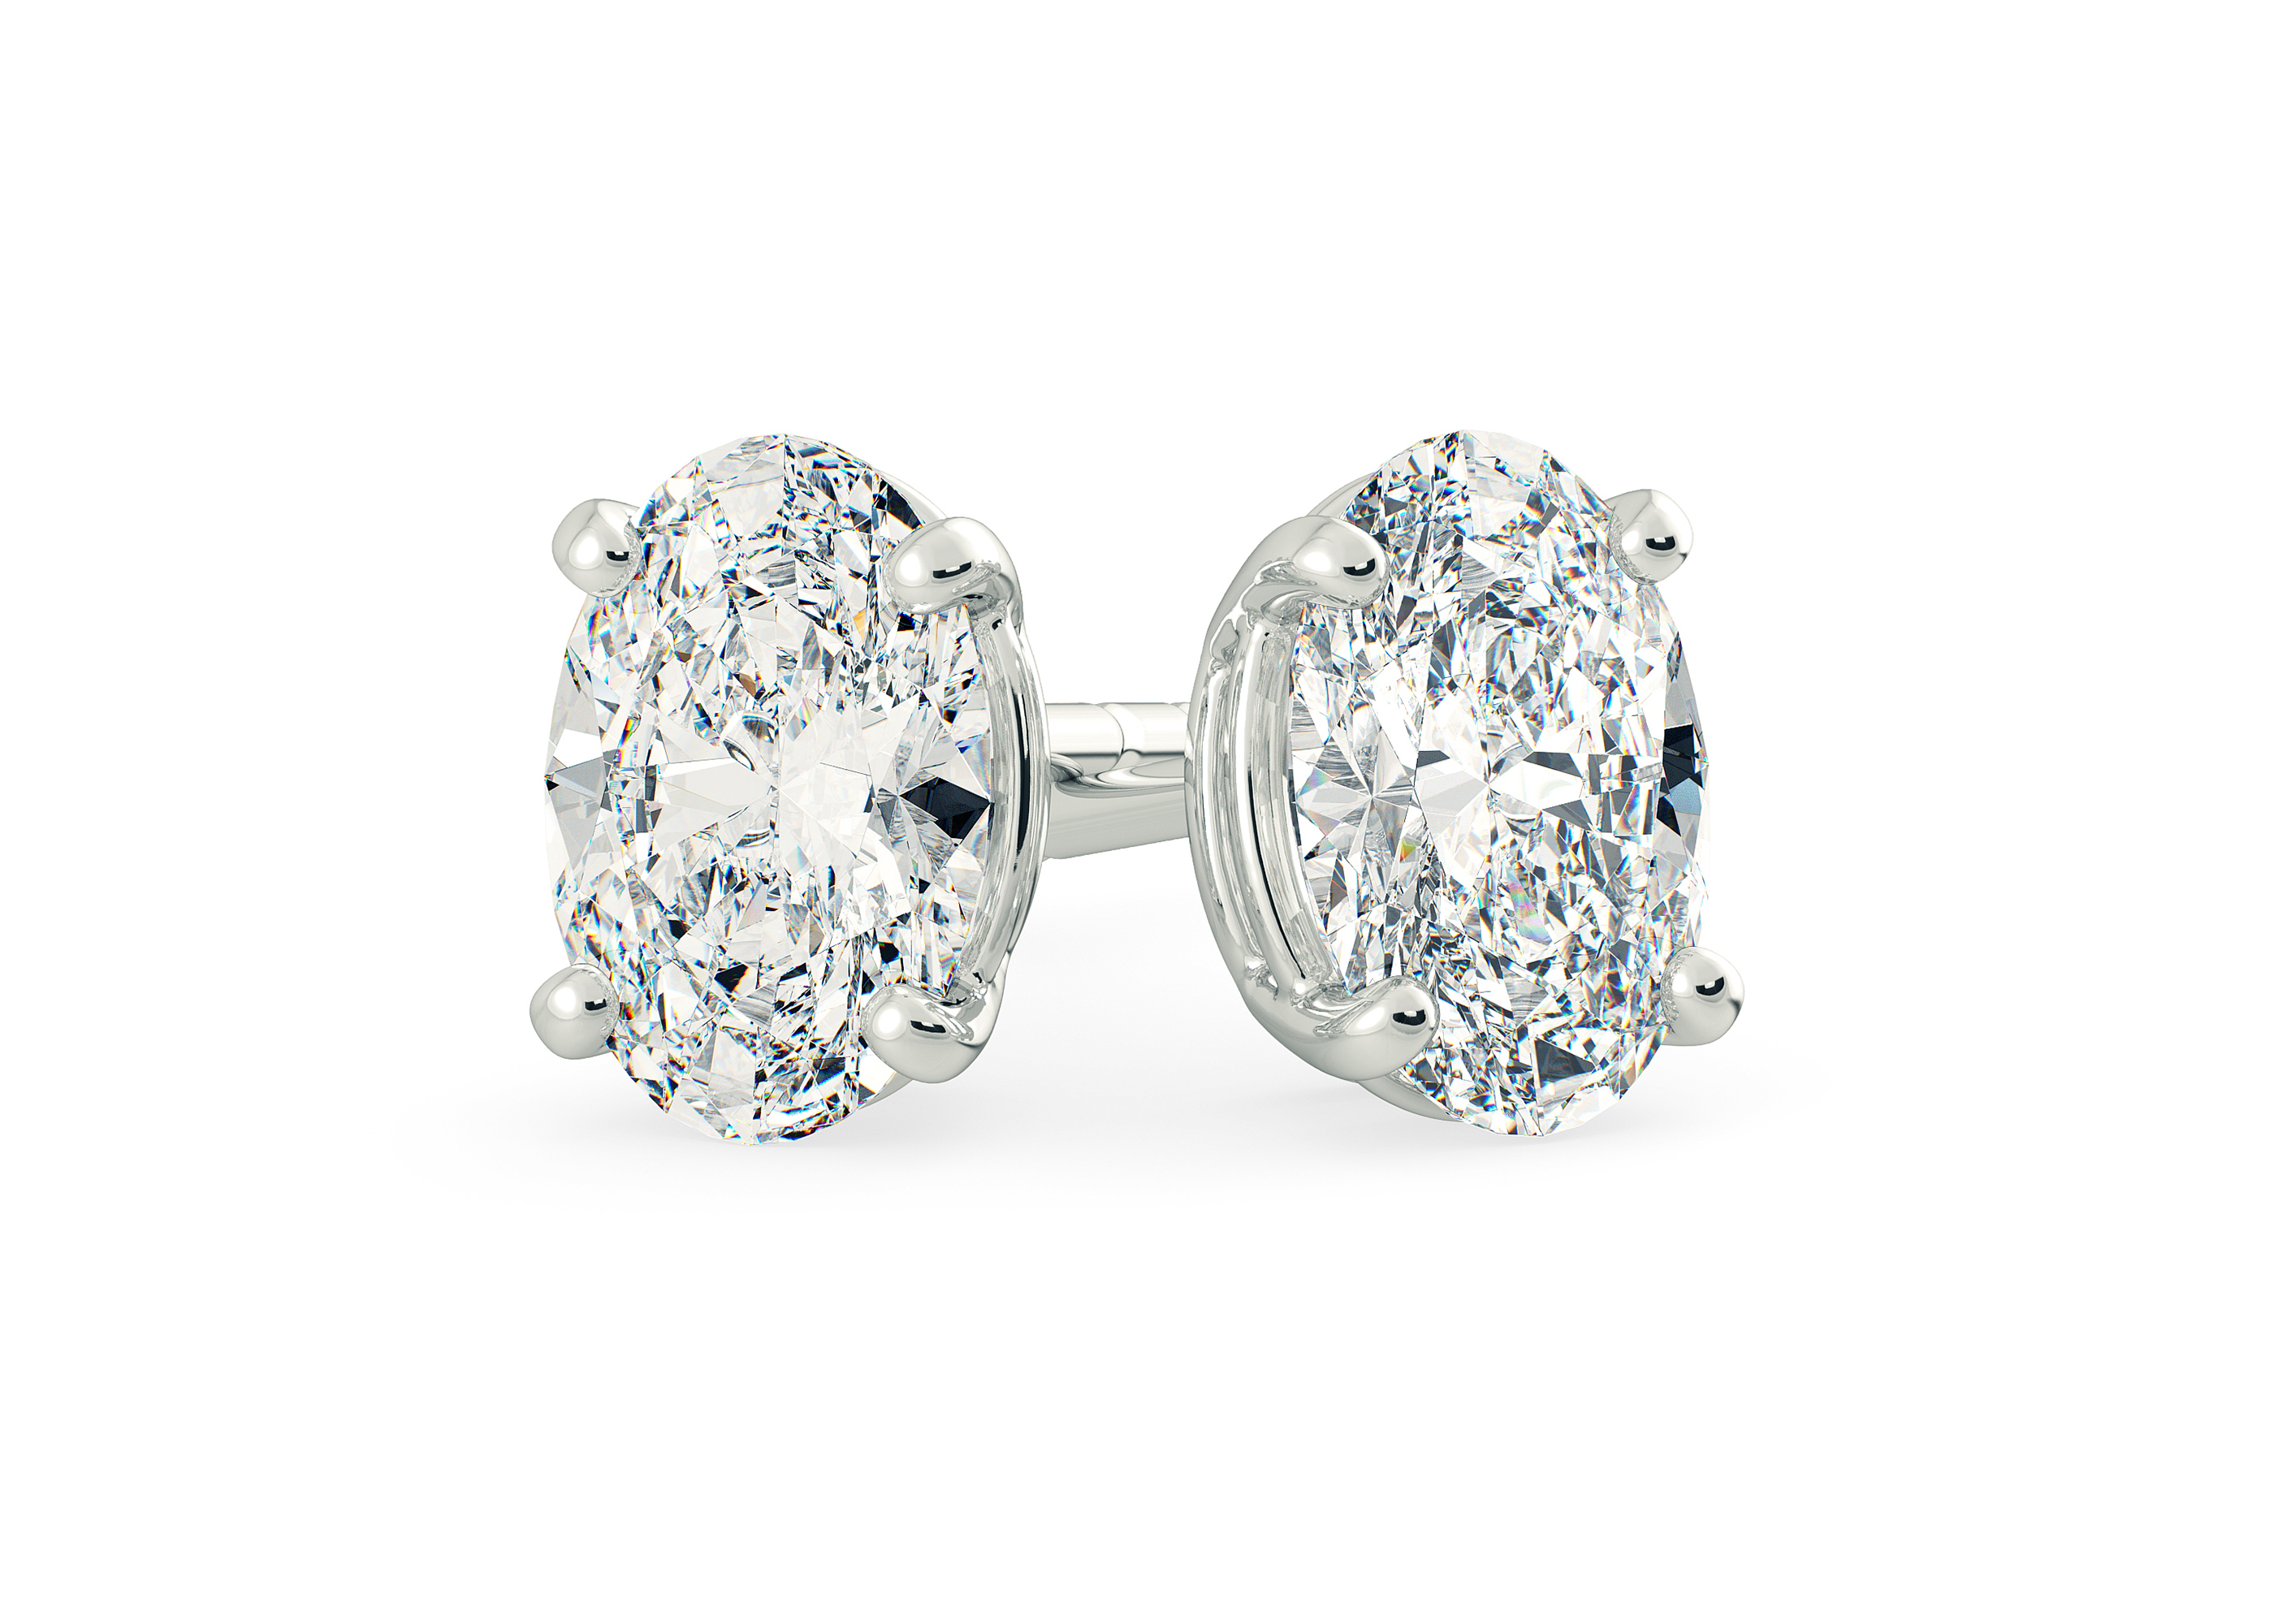 Ettore Oval Diamond Stud Earrings in Platinum with Butterfly Backs